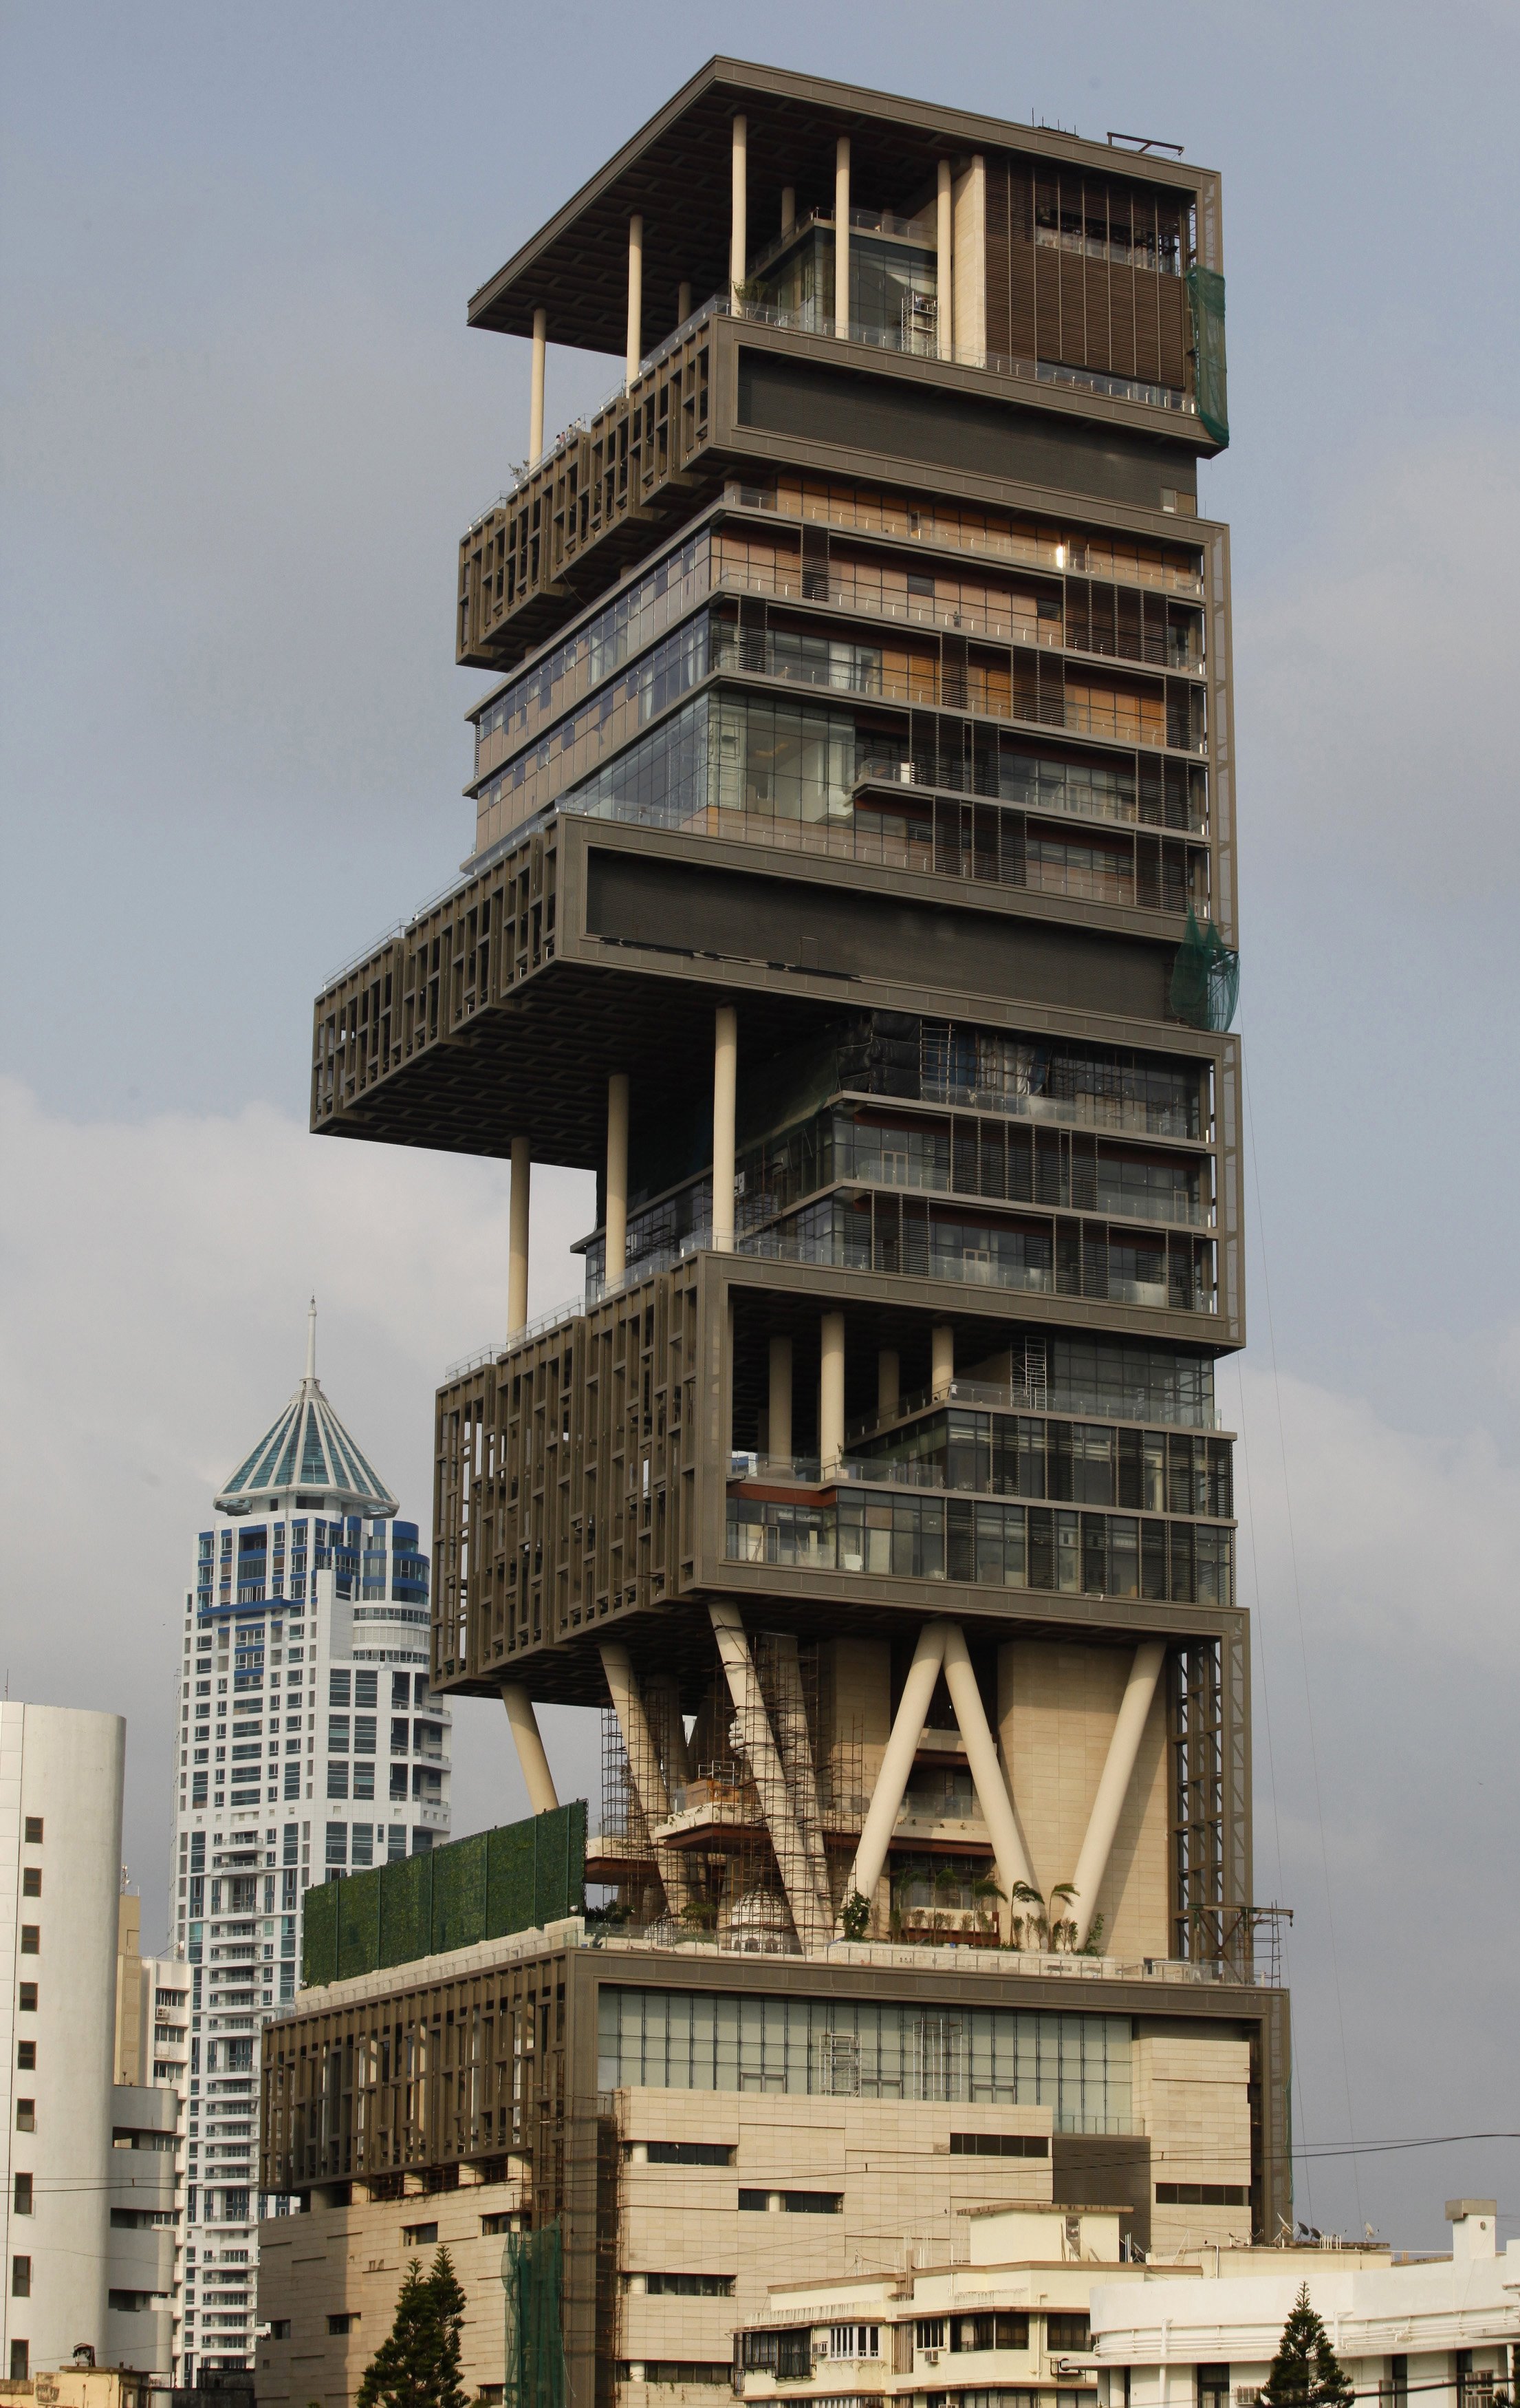 India's wealthiest man Mukesh Ambani's 27-story skyscraper home in Mumbai spent around 2 Billion for the construction of the house.